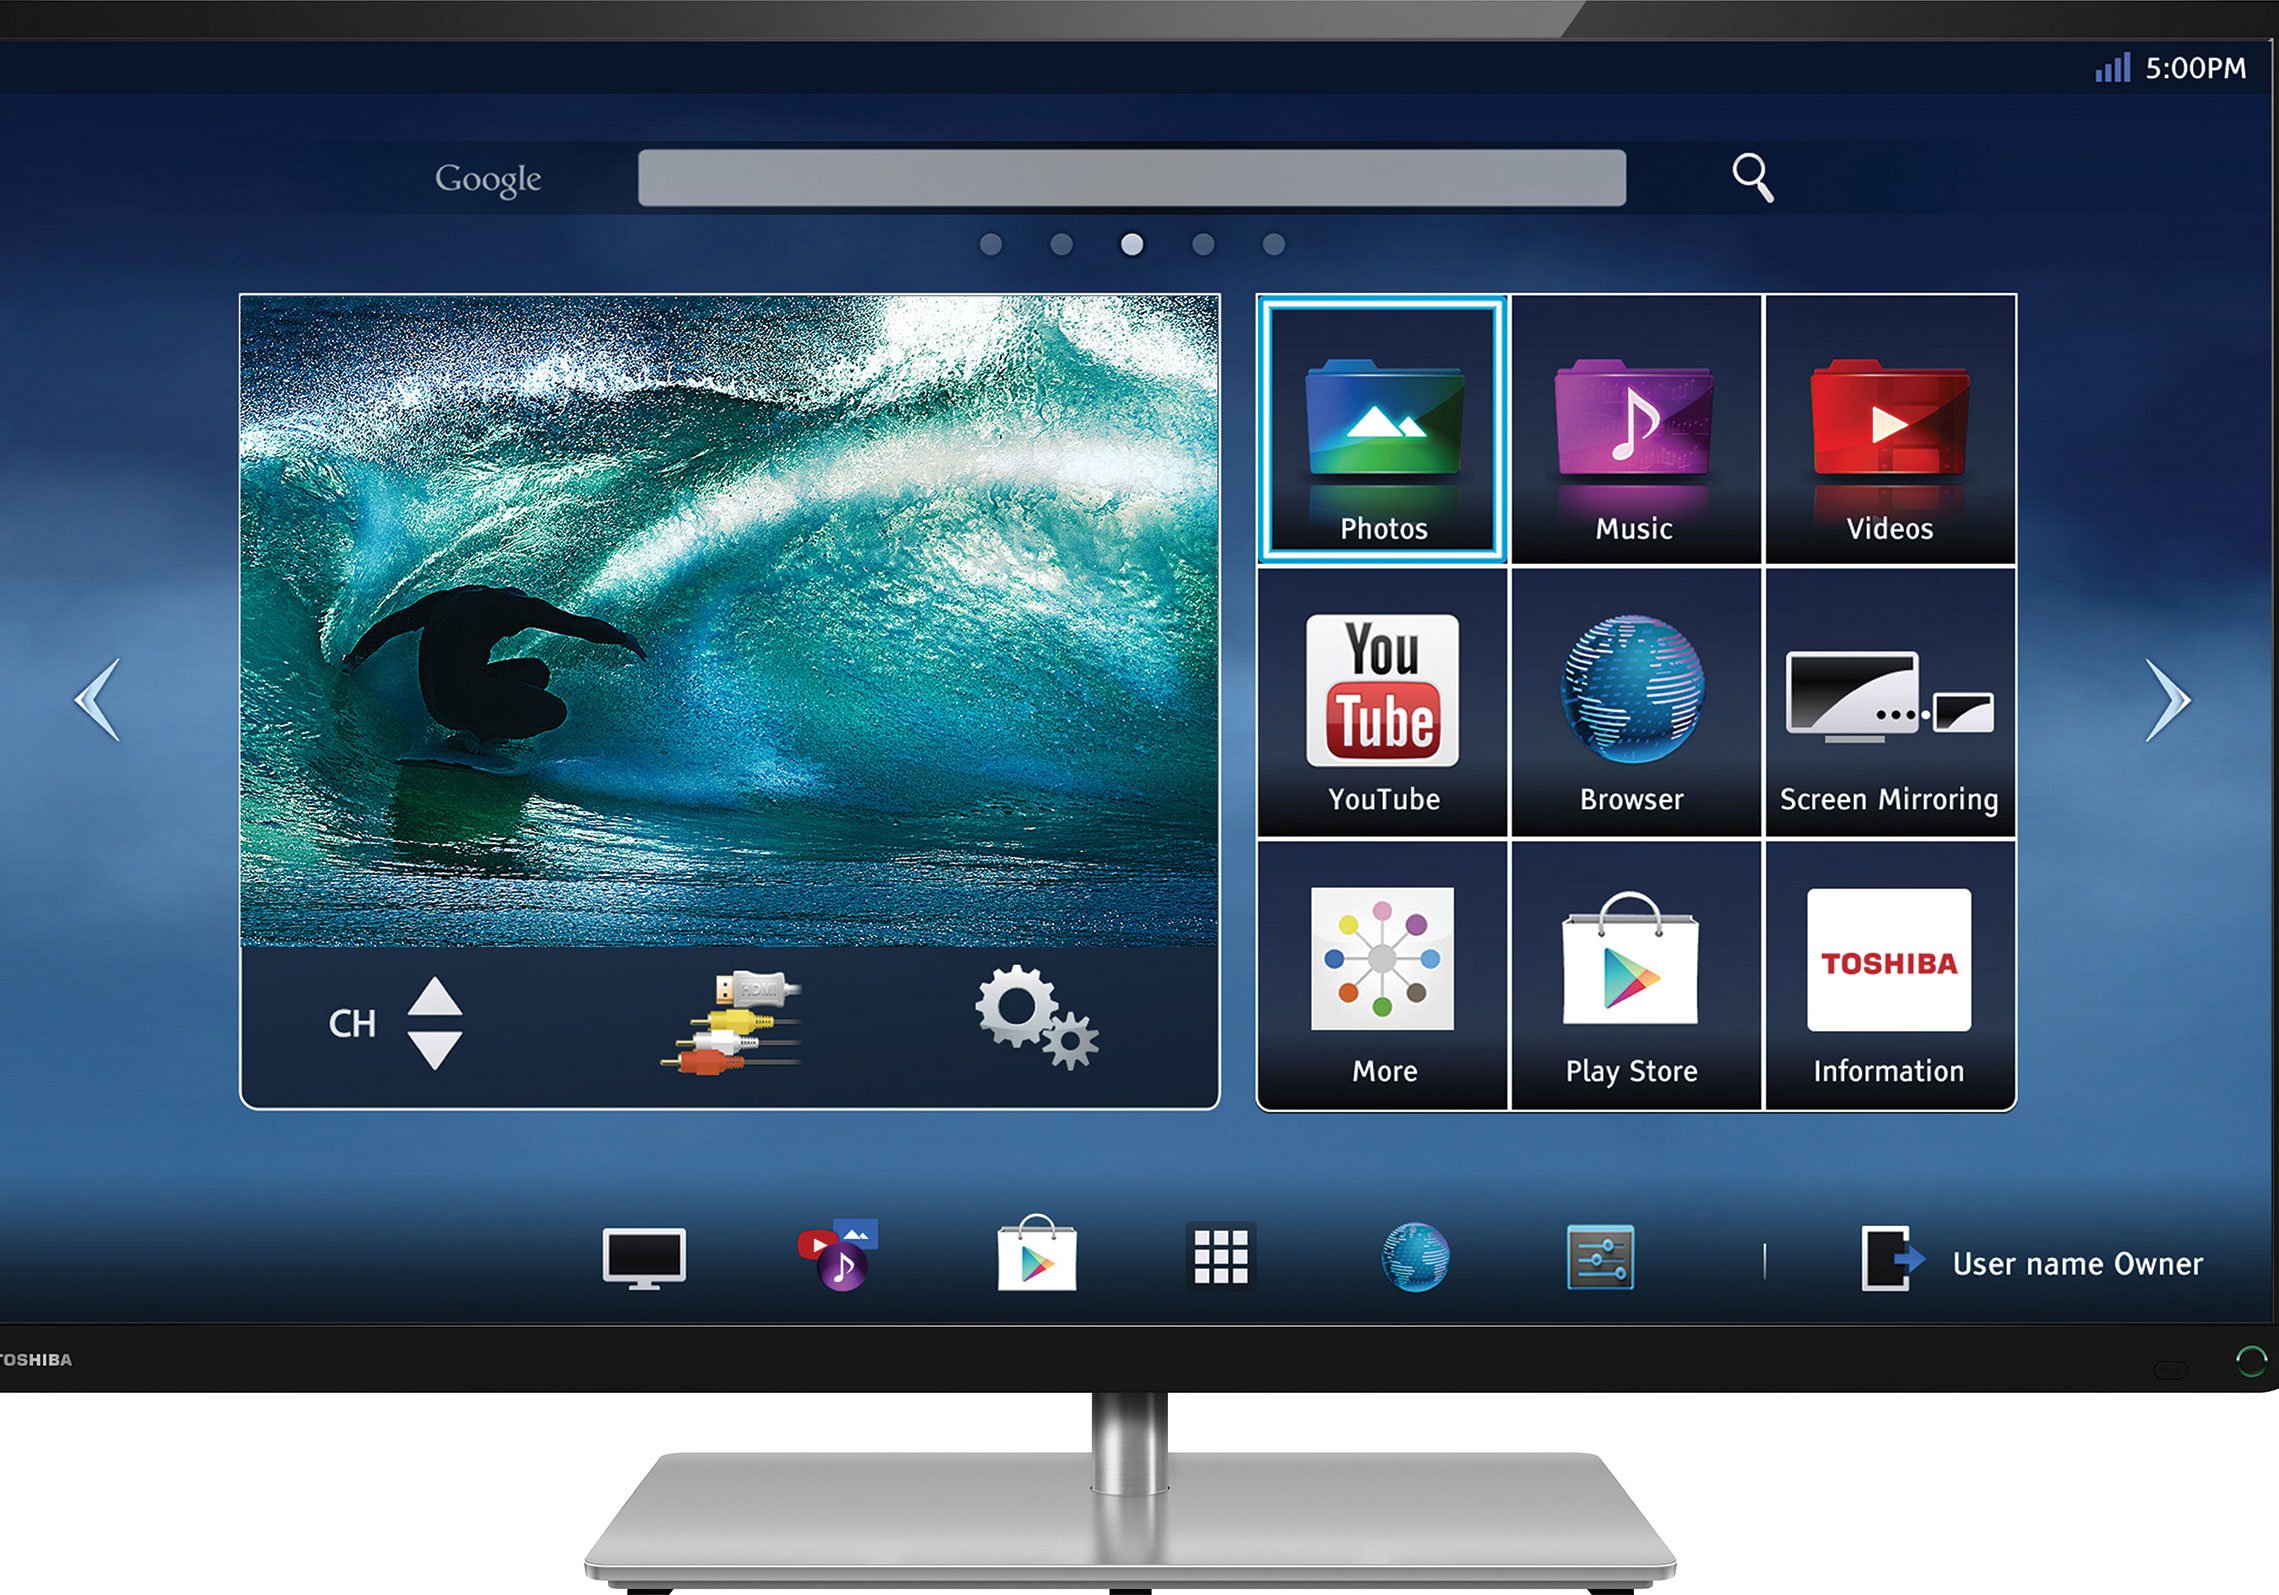 Недорогие телевизоры андроид. Smart TV max4300s. Телевизор андроид. Телевизор андроид ТВ. Экран андроид ТВ.